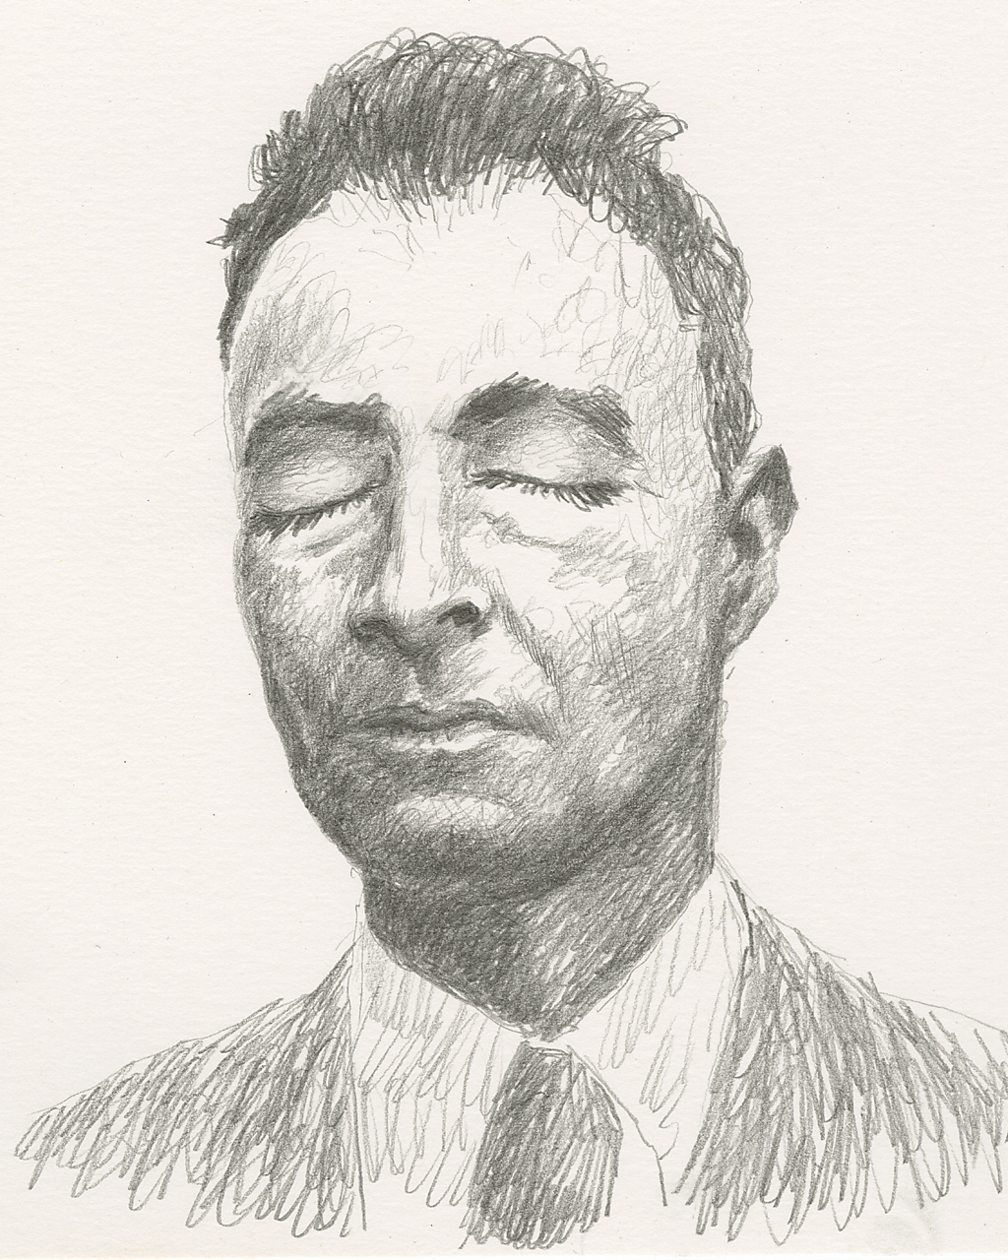 Ben Platts-Mills A portrait of Oppenheimer, illustrated by the author (Credit: Ben Platts-Mills)